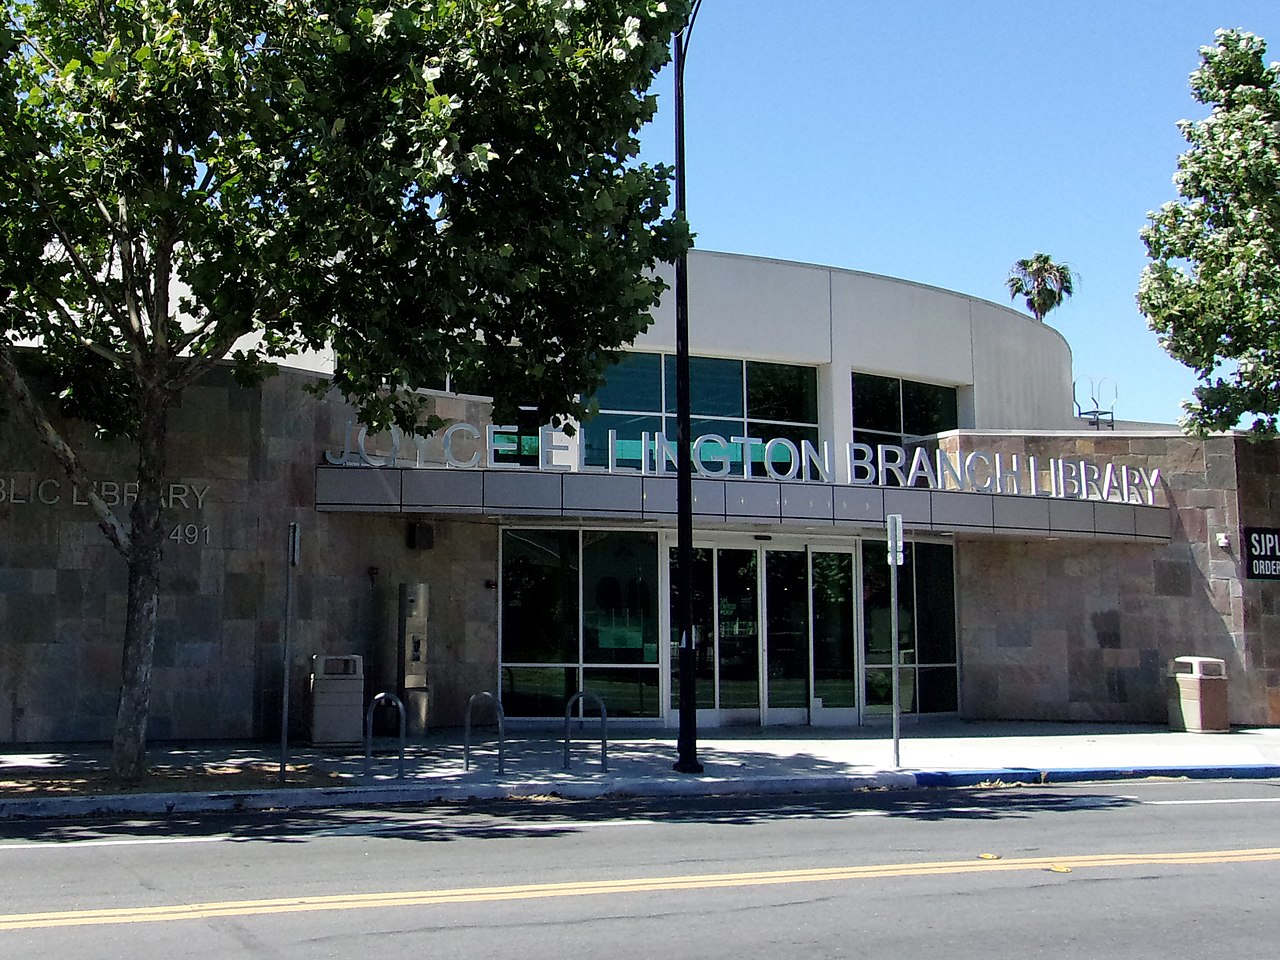 Joyce Ellington Branch of the San Jose Public Library - outside